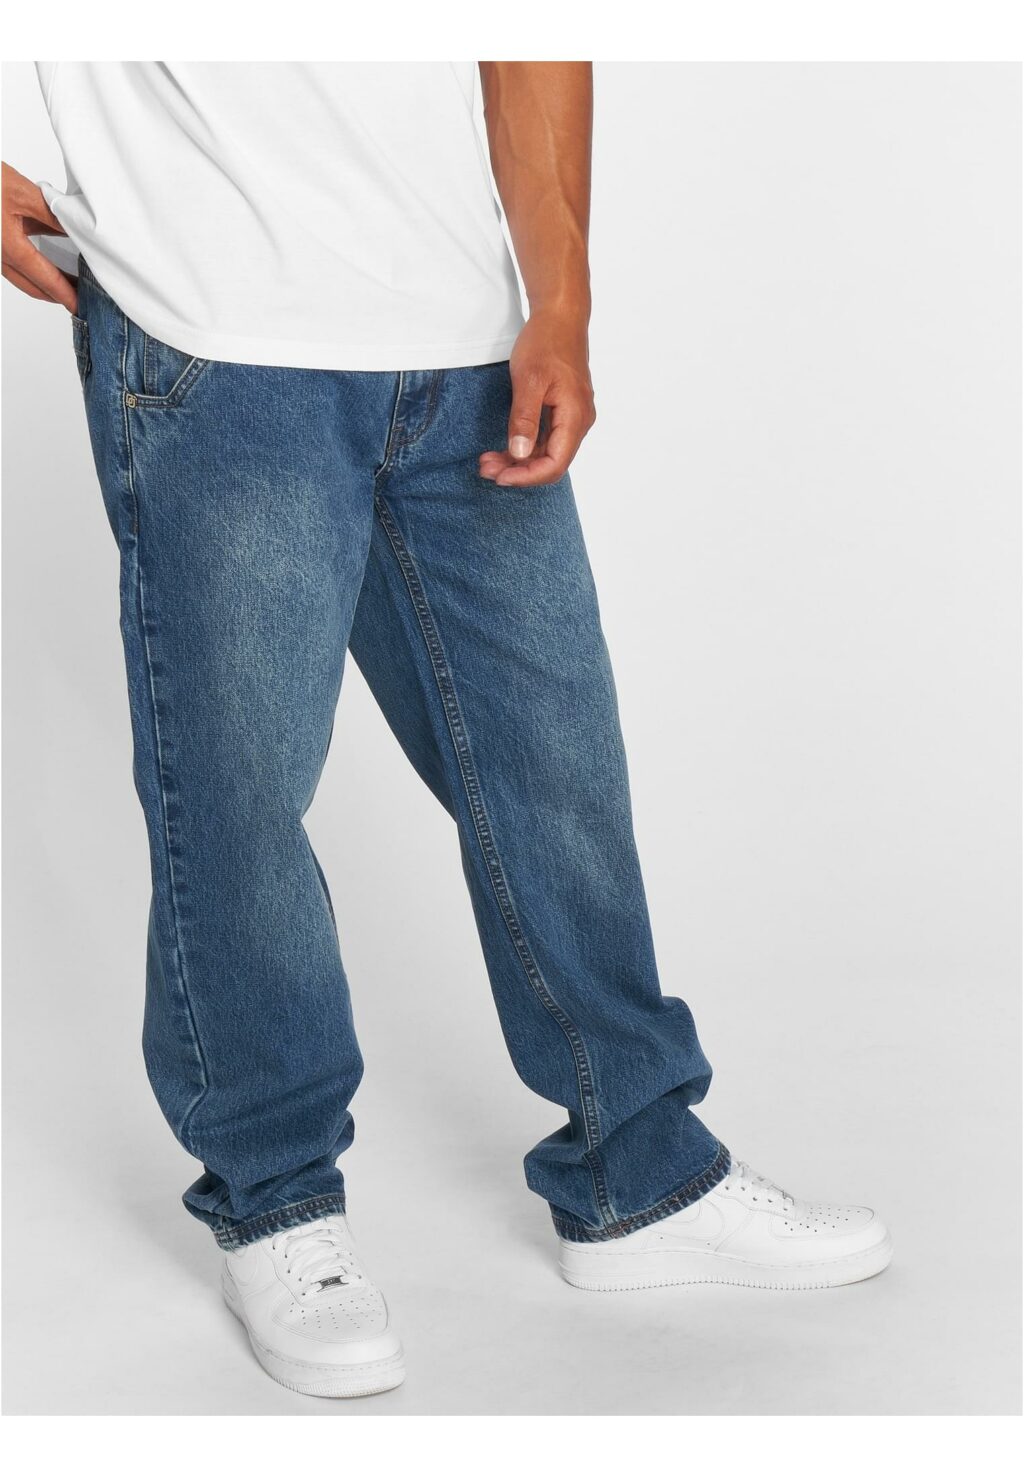 Brother Jeans Medium denimblue DGJS159